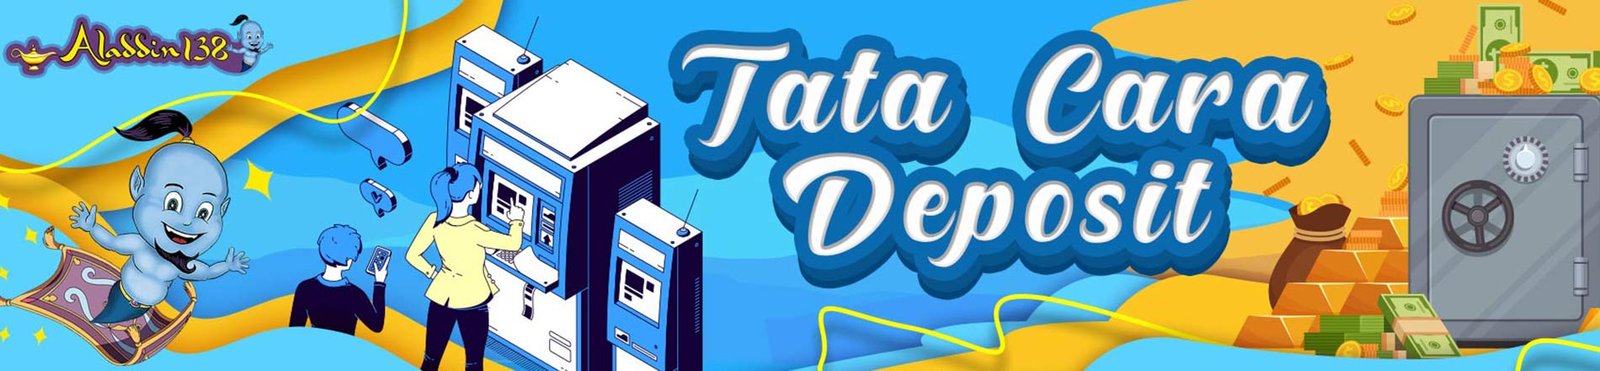 Tata Cara Deposit